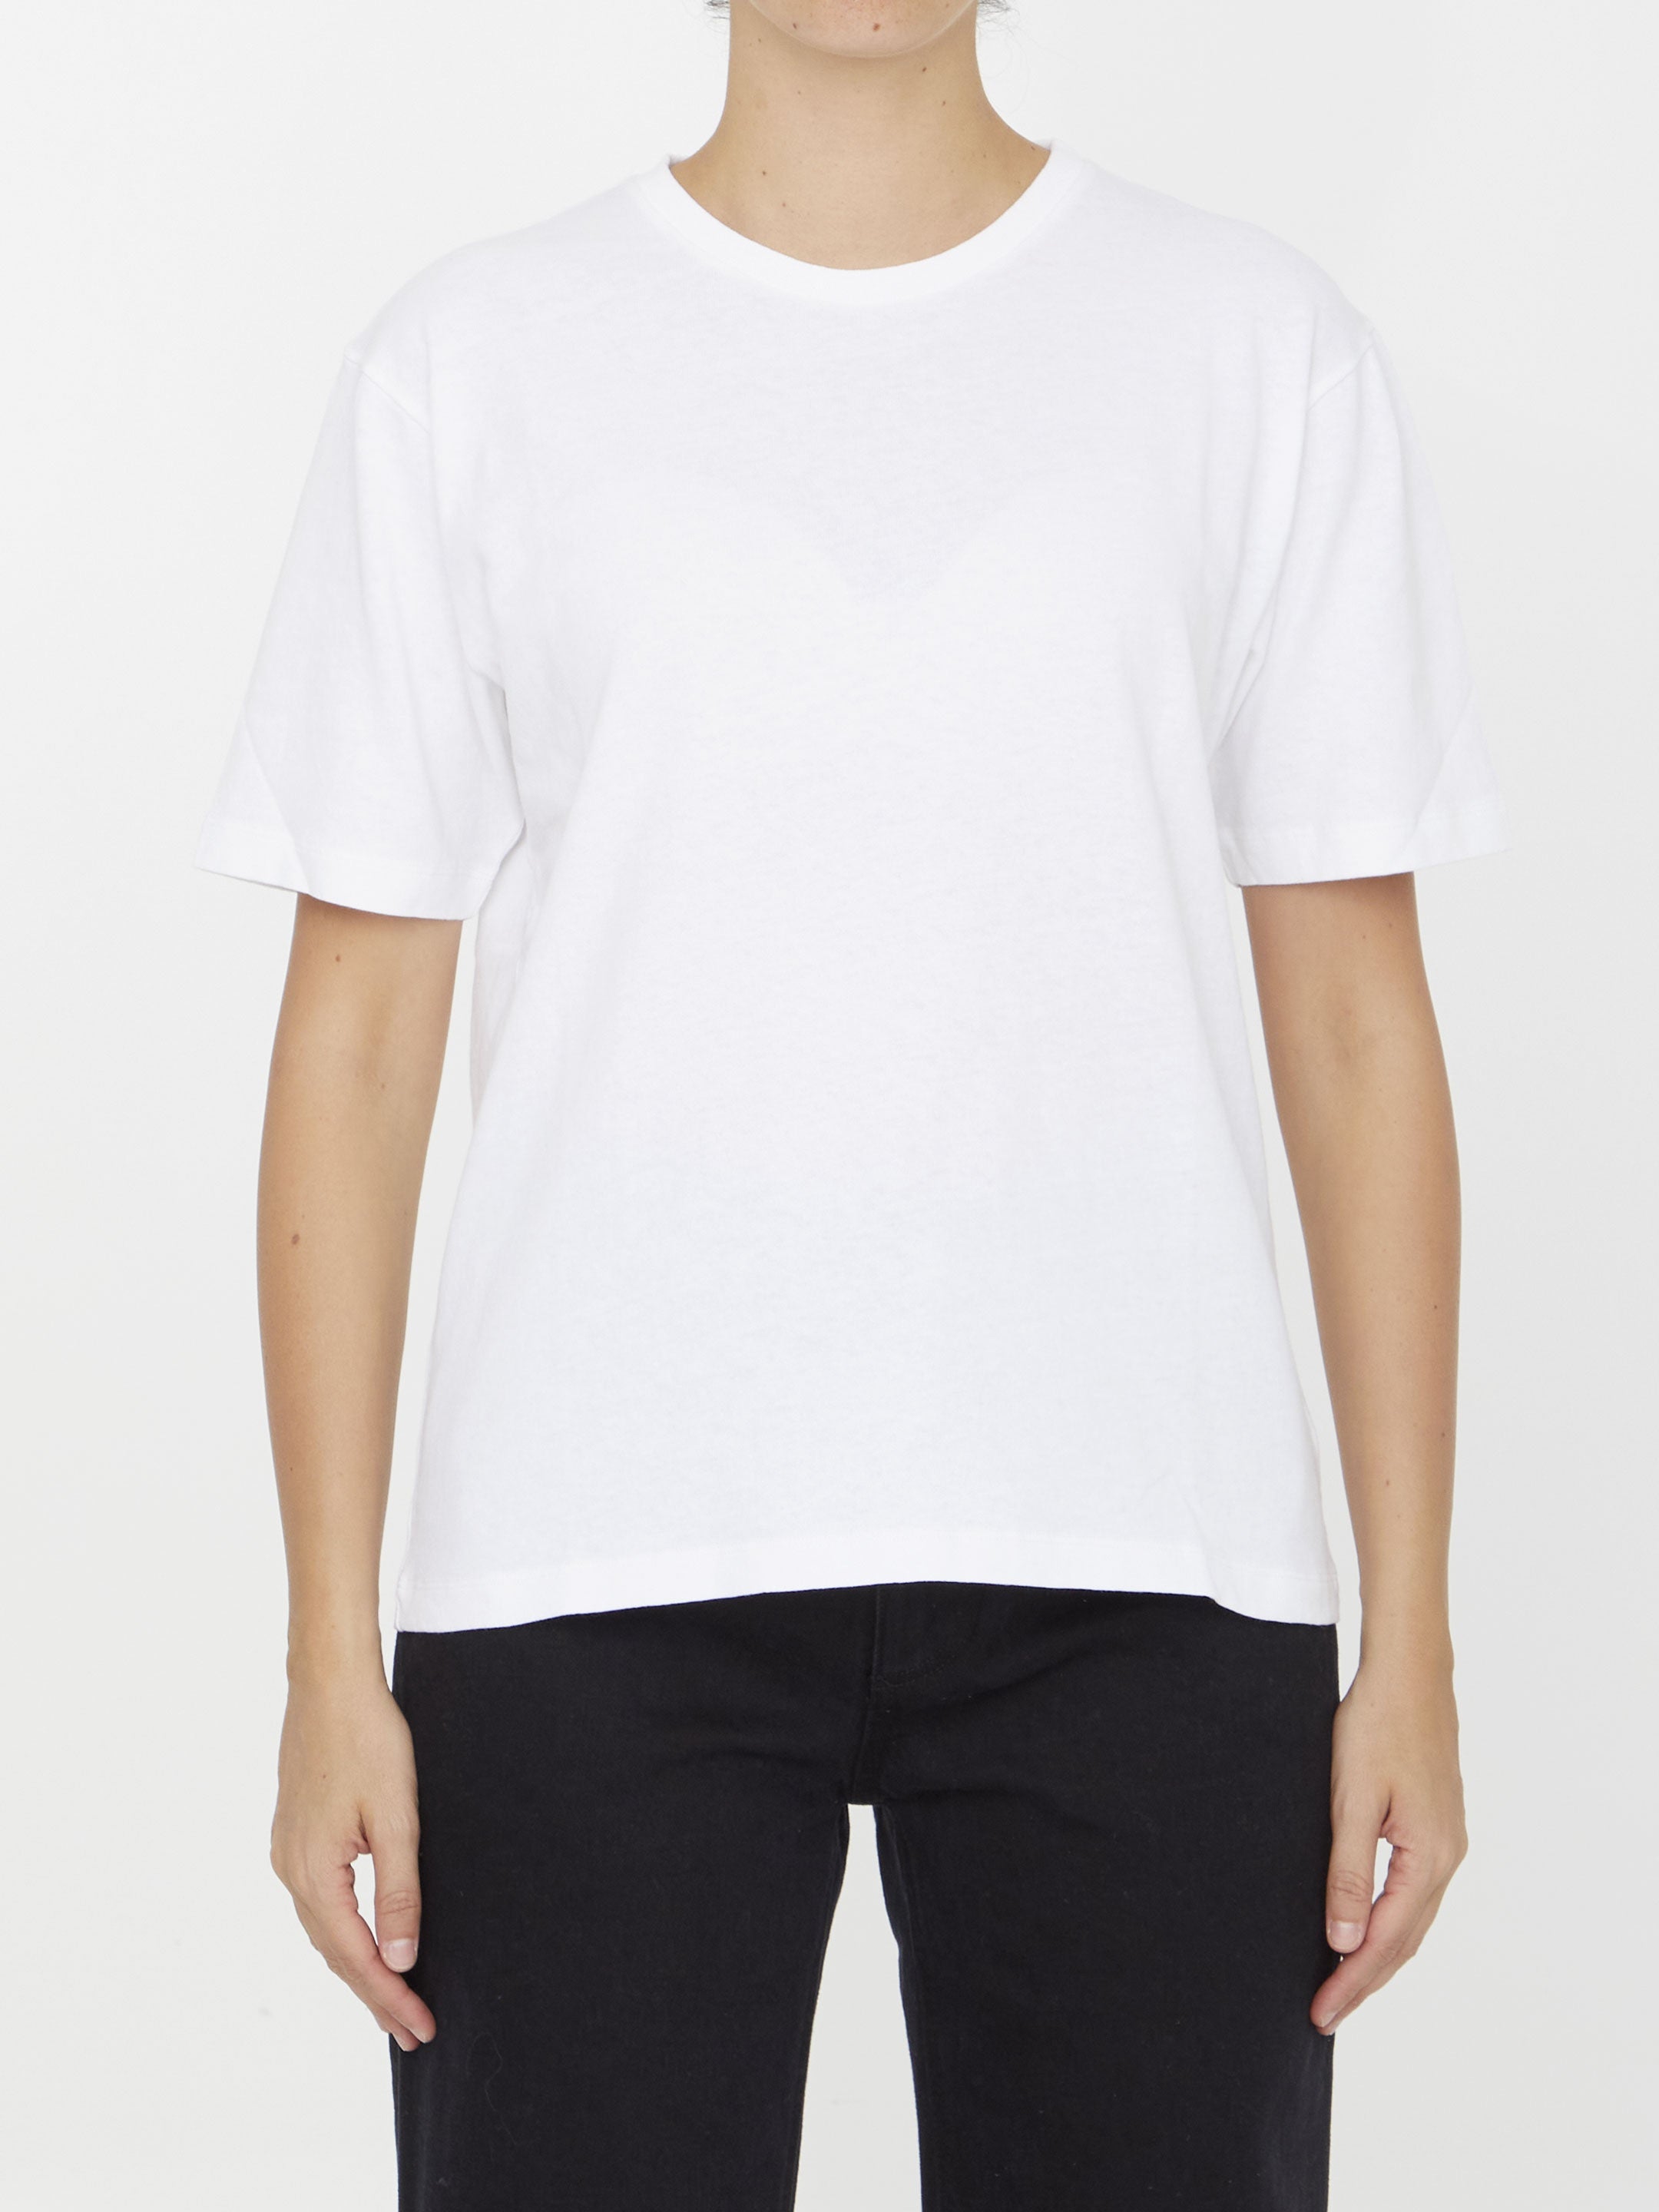 KHAITE-OUTLET-SALE-Mae-t-shirt-Shirts-M-WHITE-ARCHIVE-COLLECTION.jpg